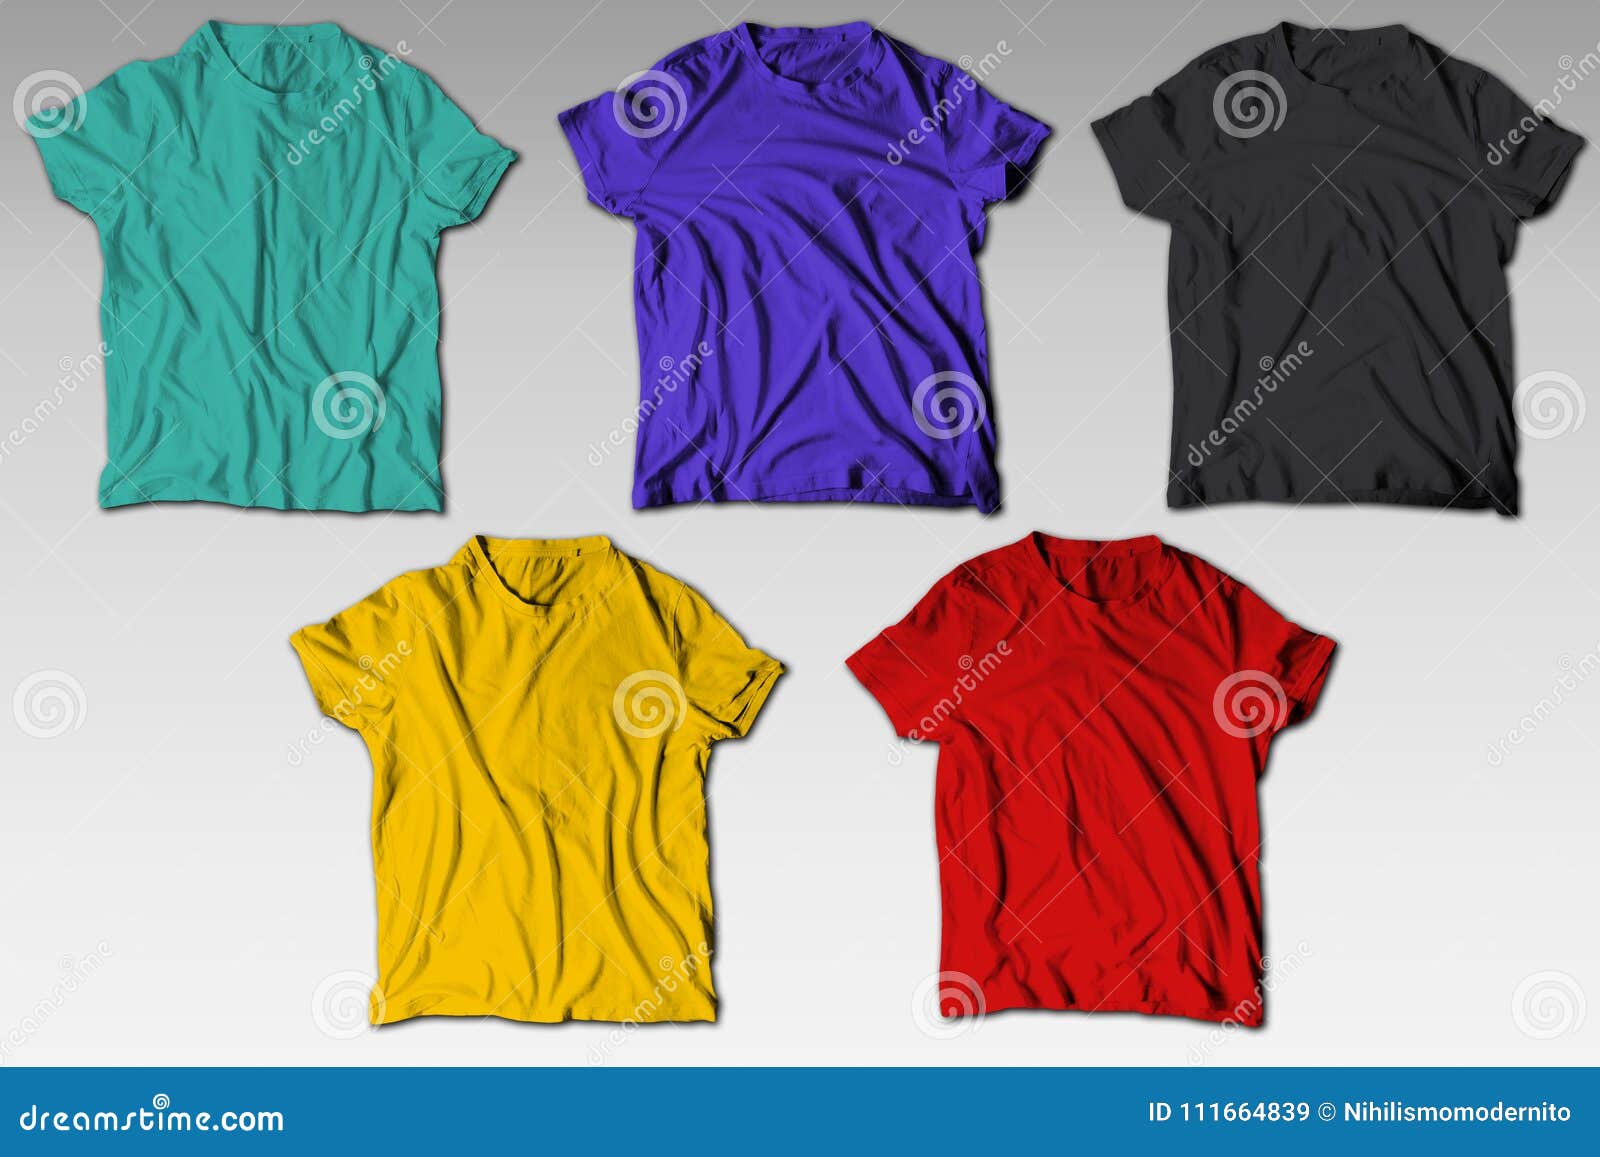 Download Reallistic Wrinkles Colorful T Shirt Mockup Bundle Stock Image Image Of Colorful Clothing 111664839